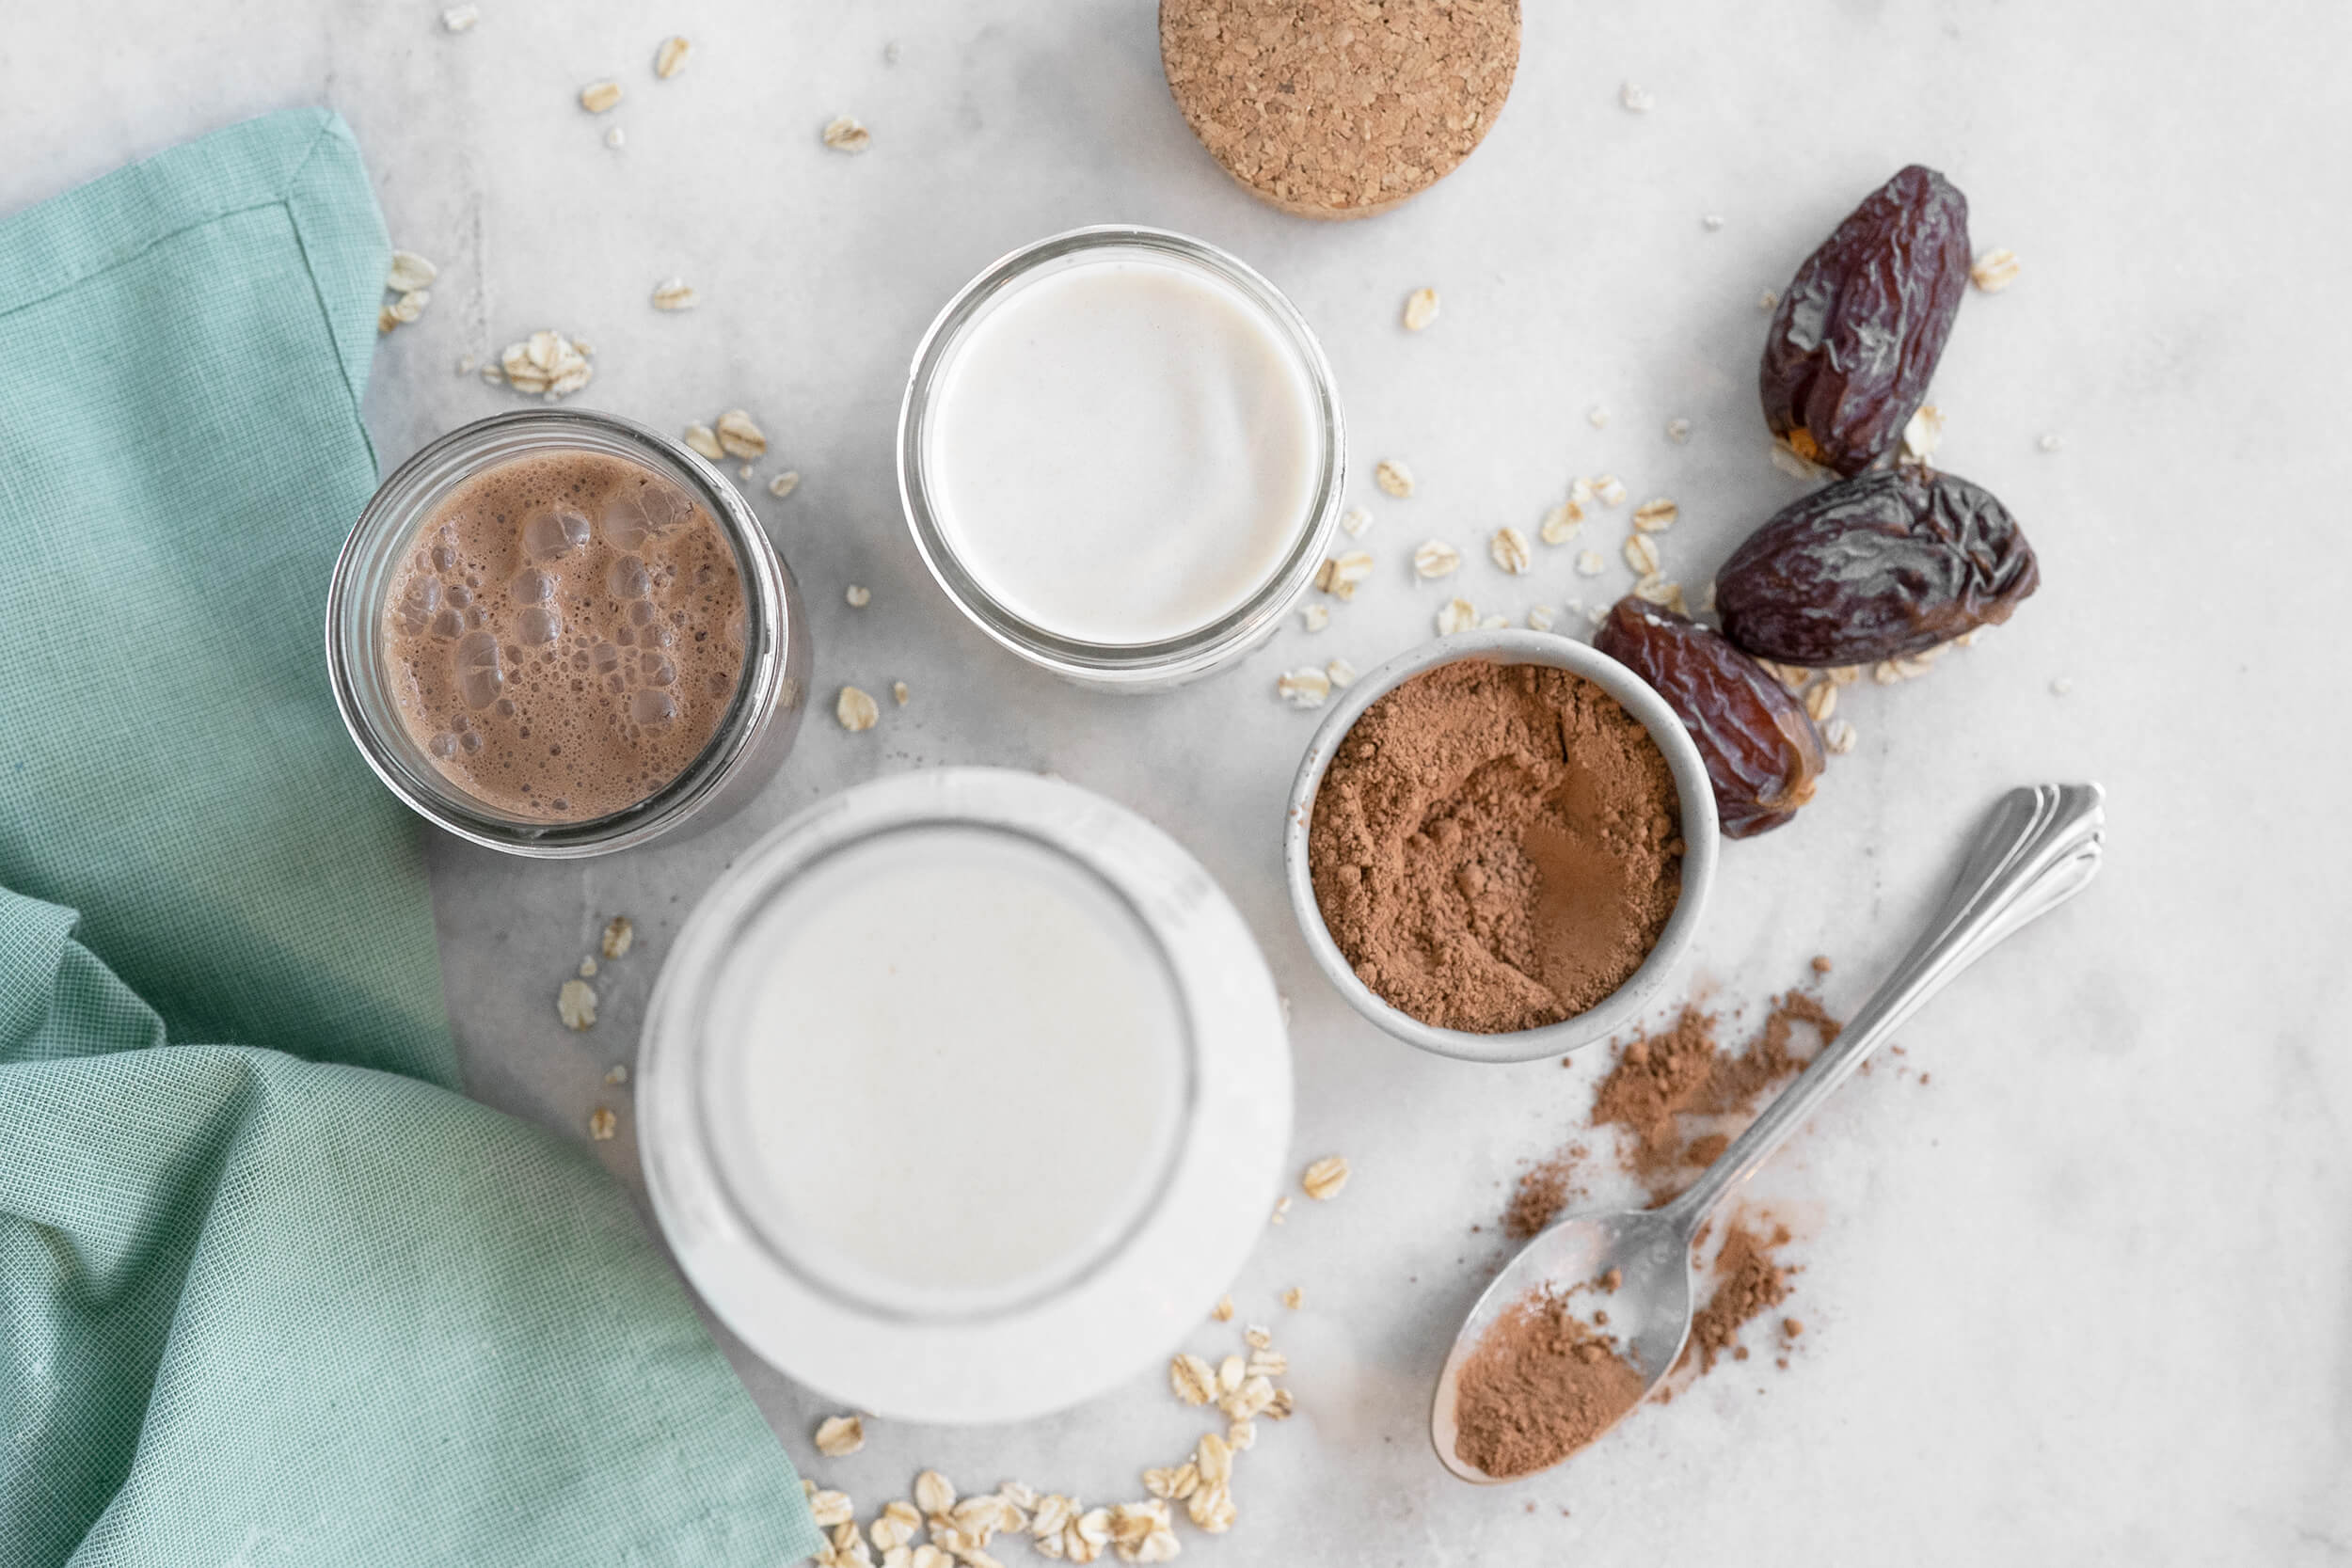 Ingredients in chocolate oat milk